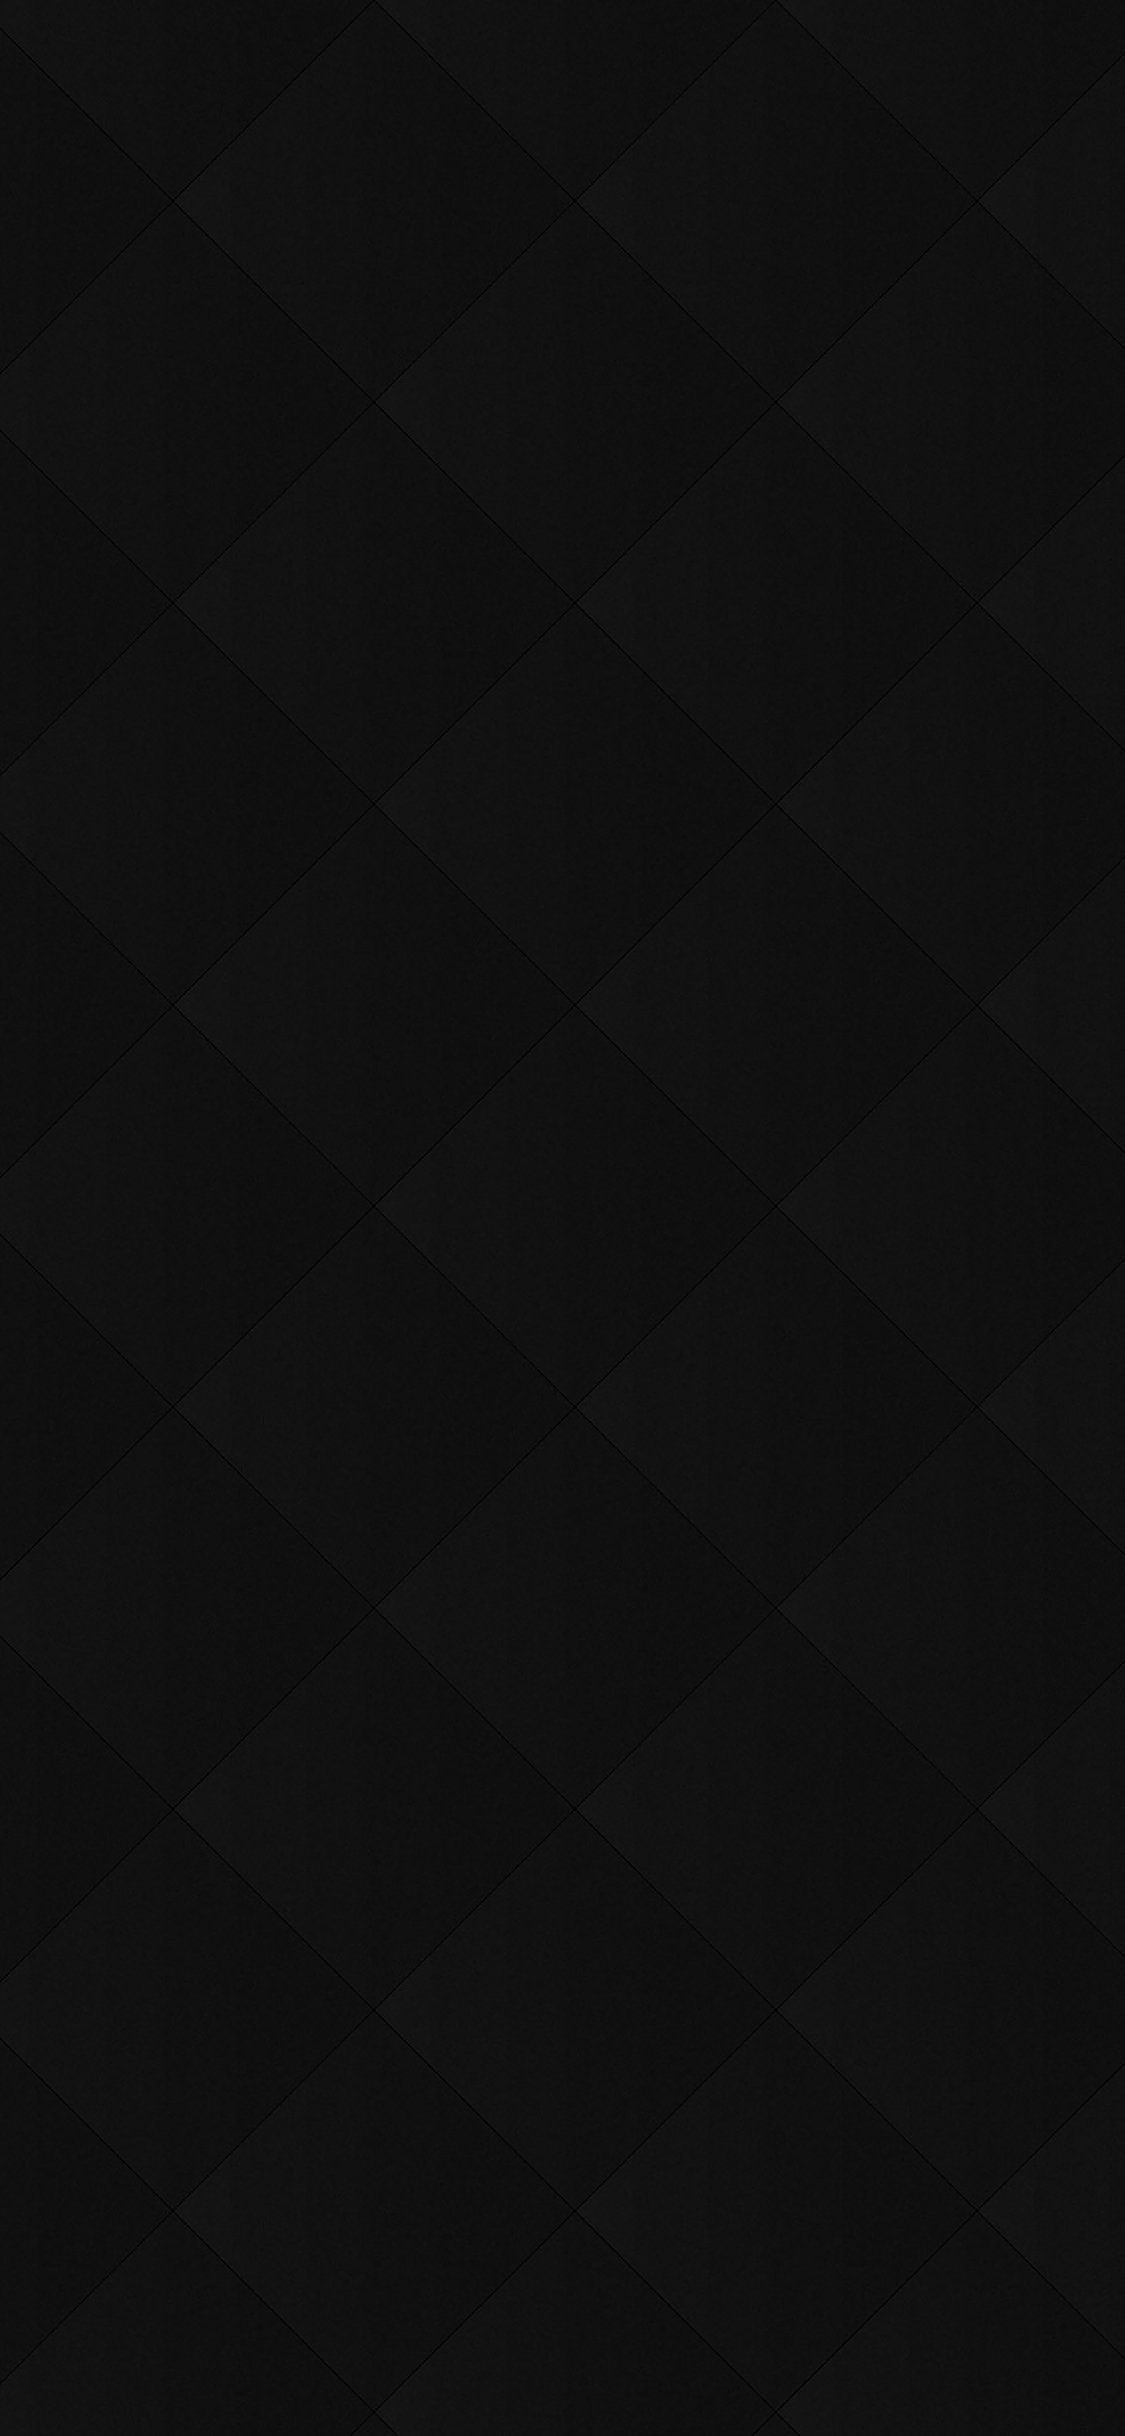 Gradient squares dark pattern iPhone wallpaper 